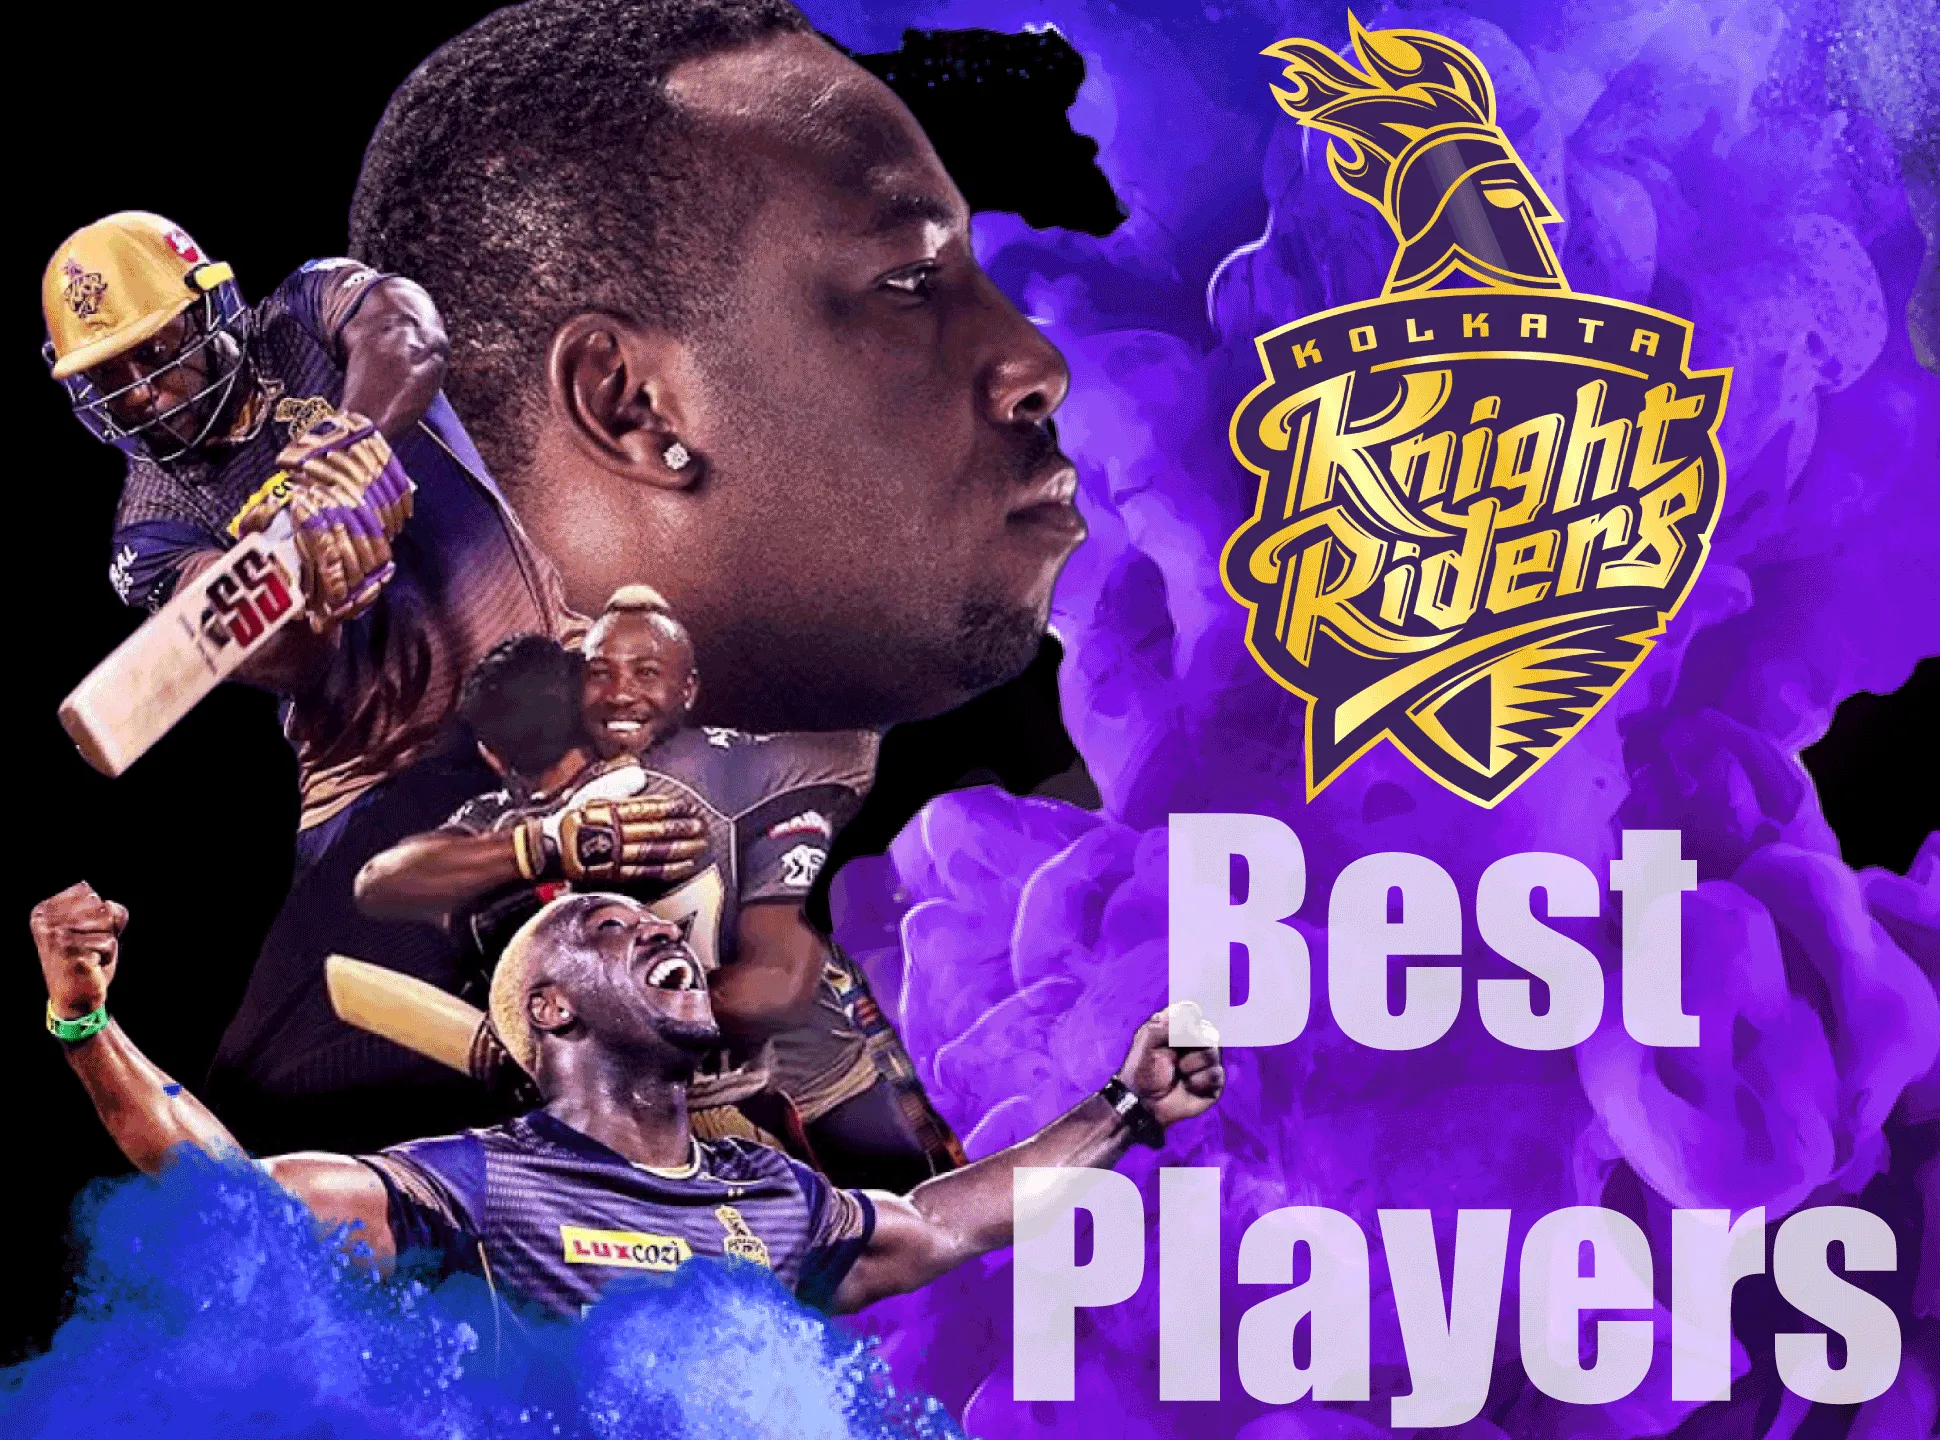 Meet the best players of the Kolkata Knight Riders team.